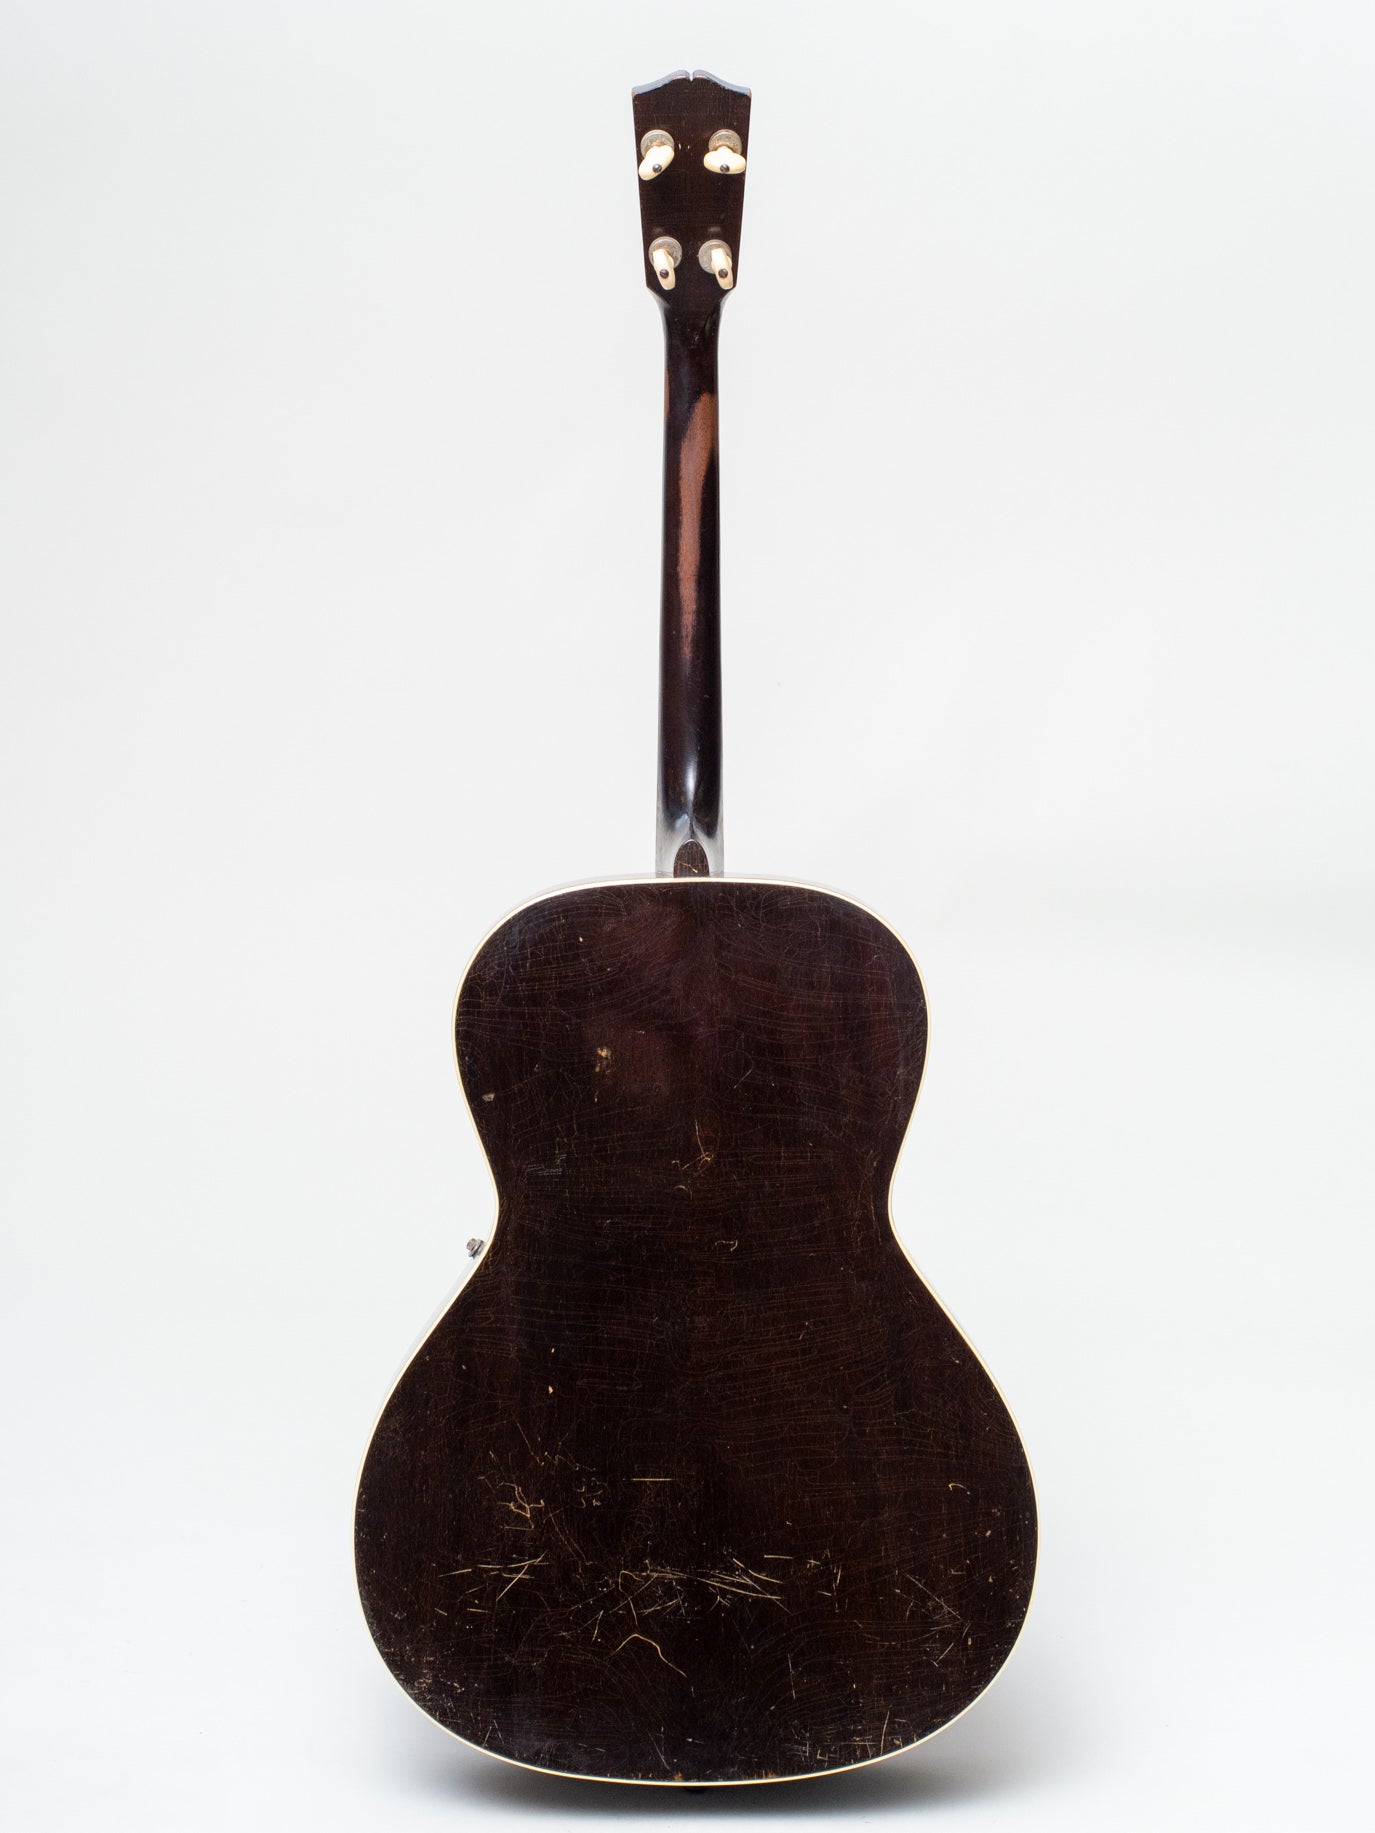 1931 Gibson TG-1